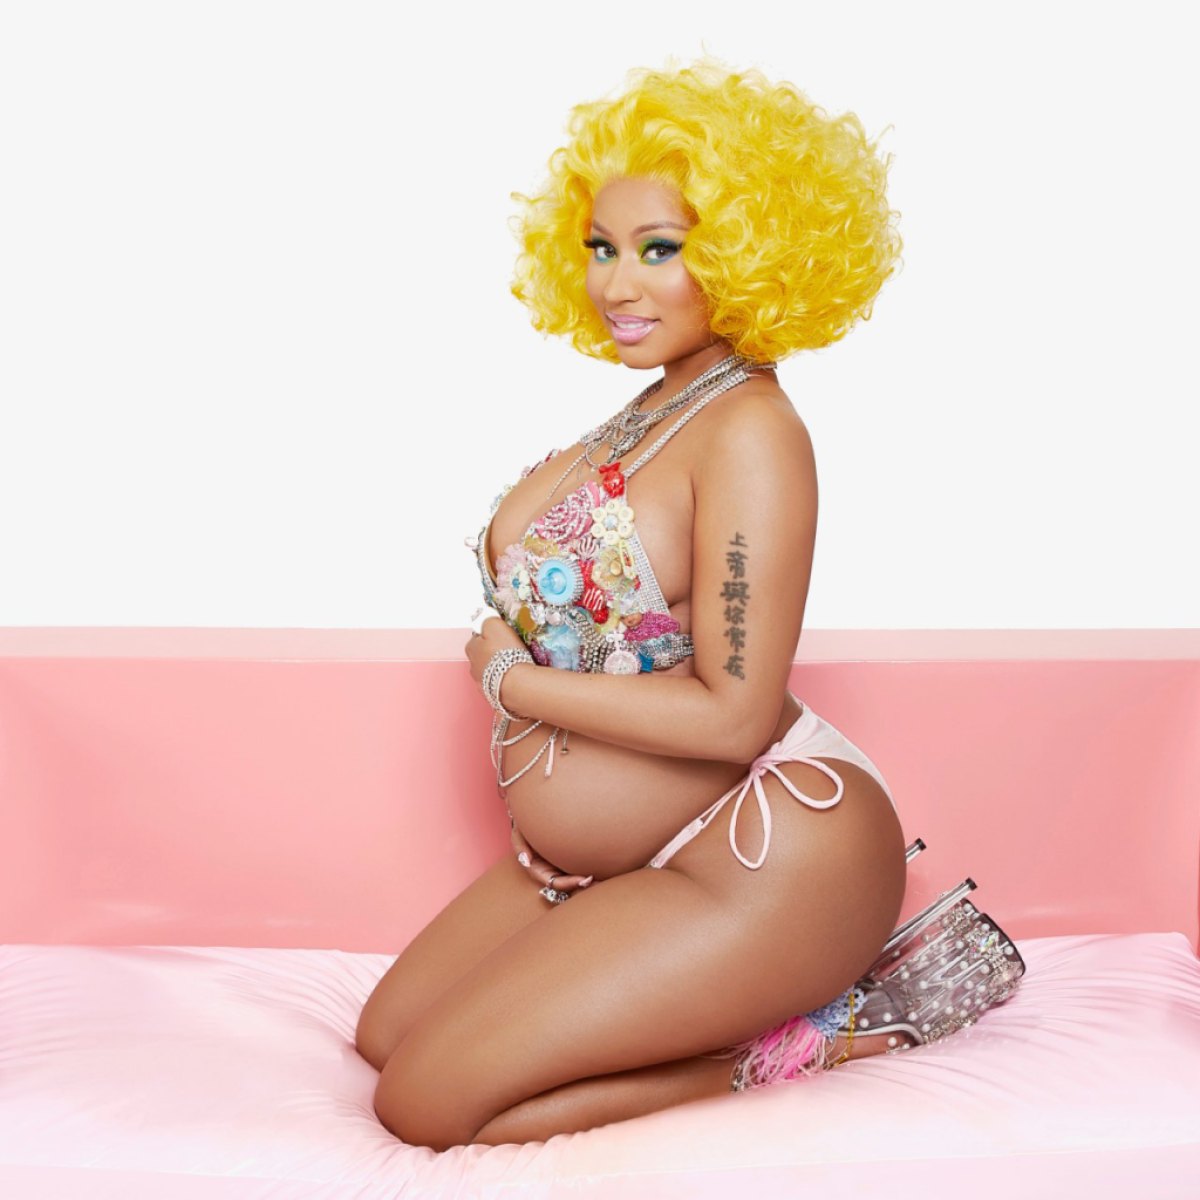 Nicki Minaj Porn Sex - Nicki Minaj's Baby's Sex: Teases Boy or Girl With New Baby Clothes